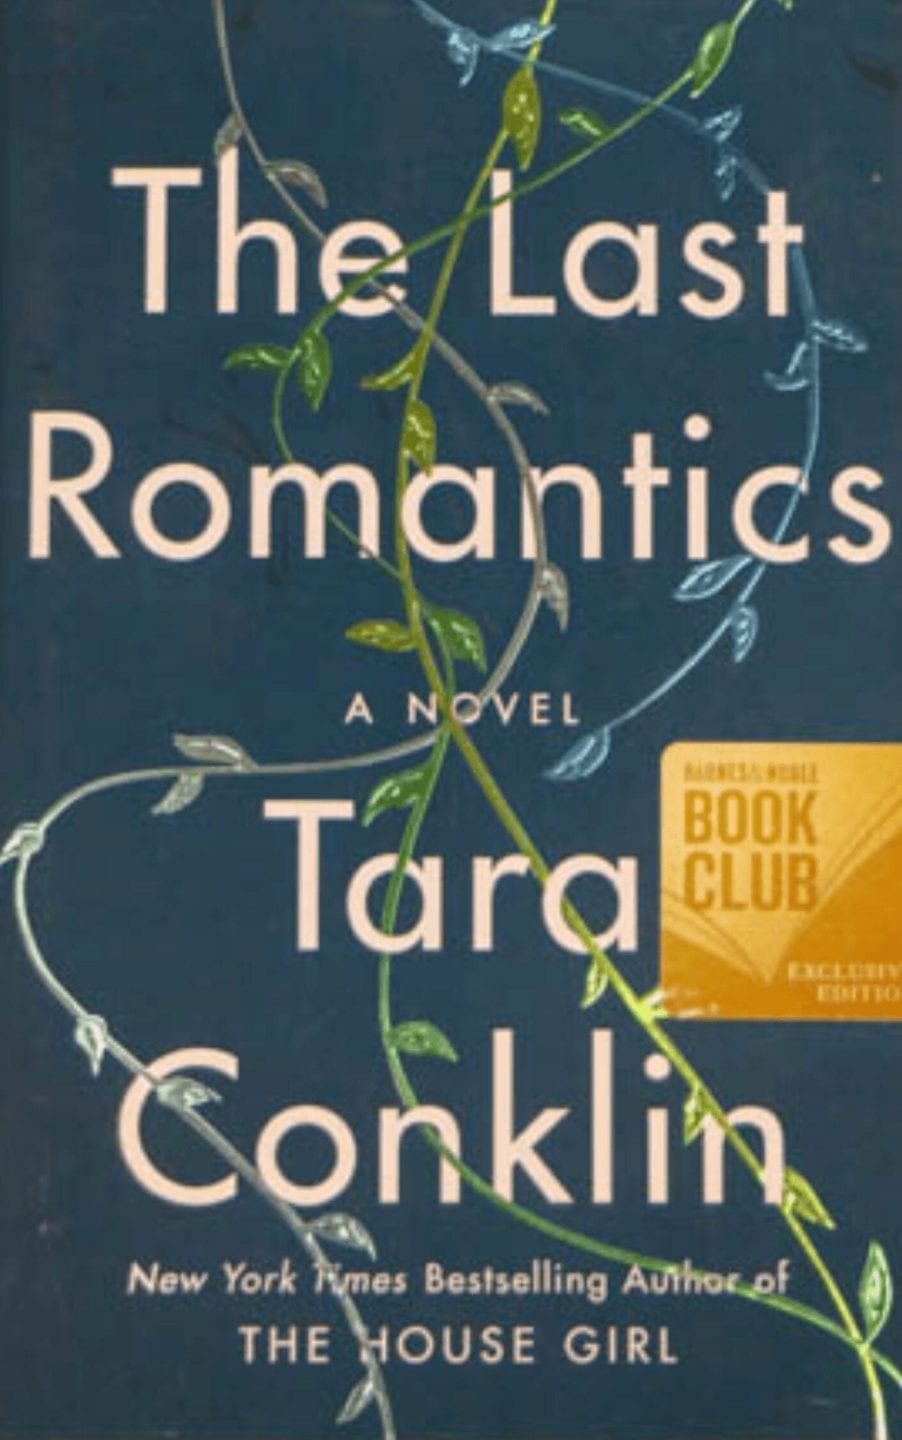 The Last Romantics by Tara Conklin